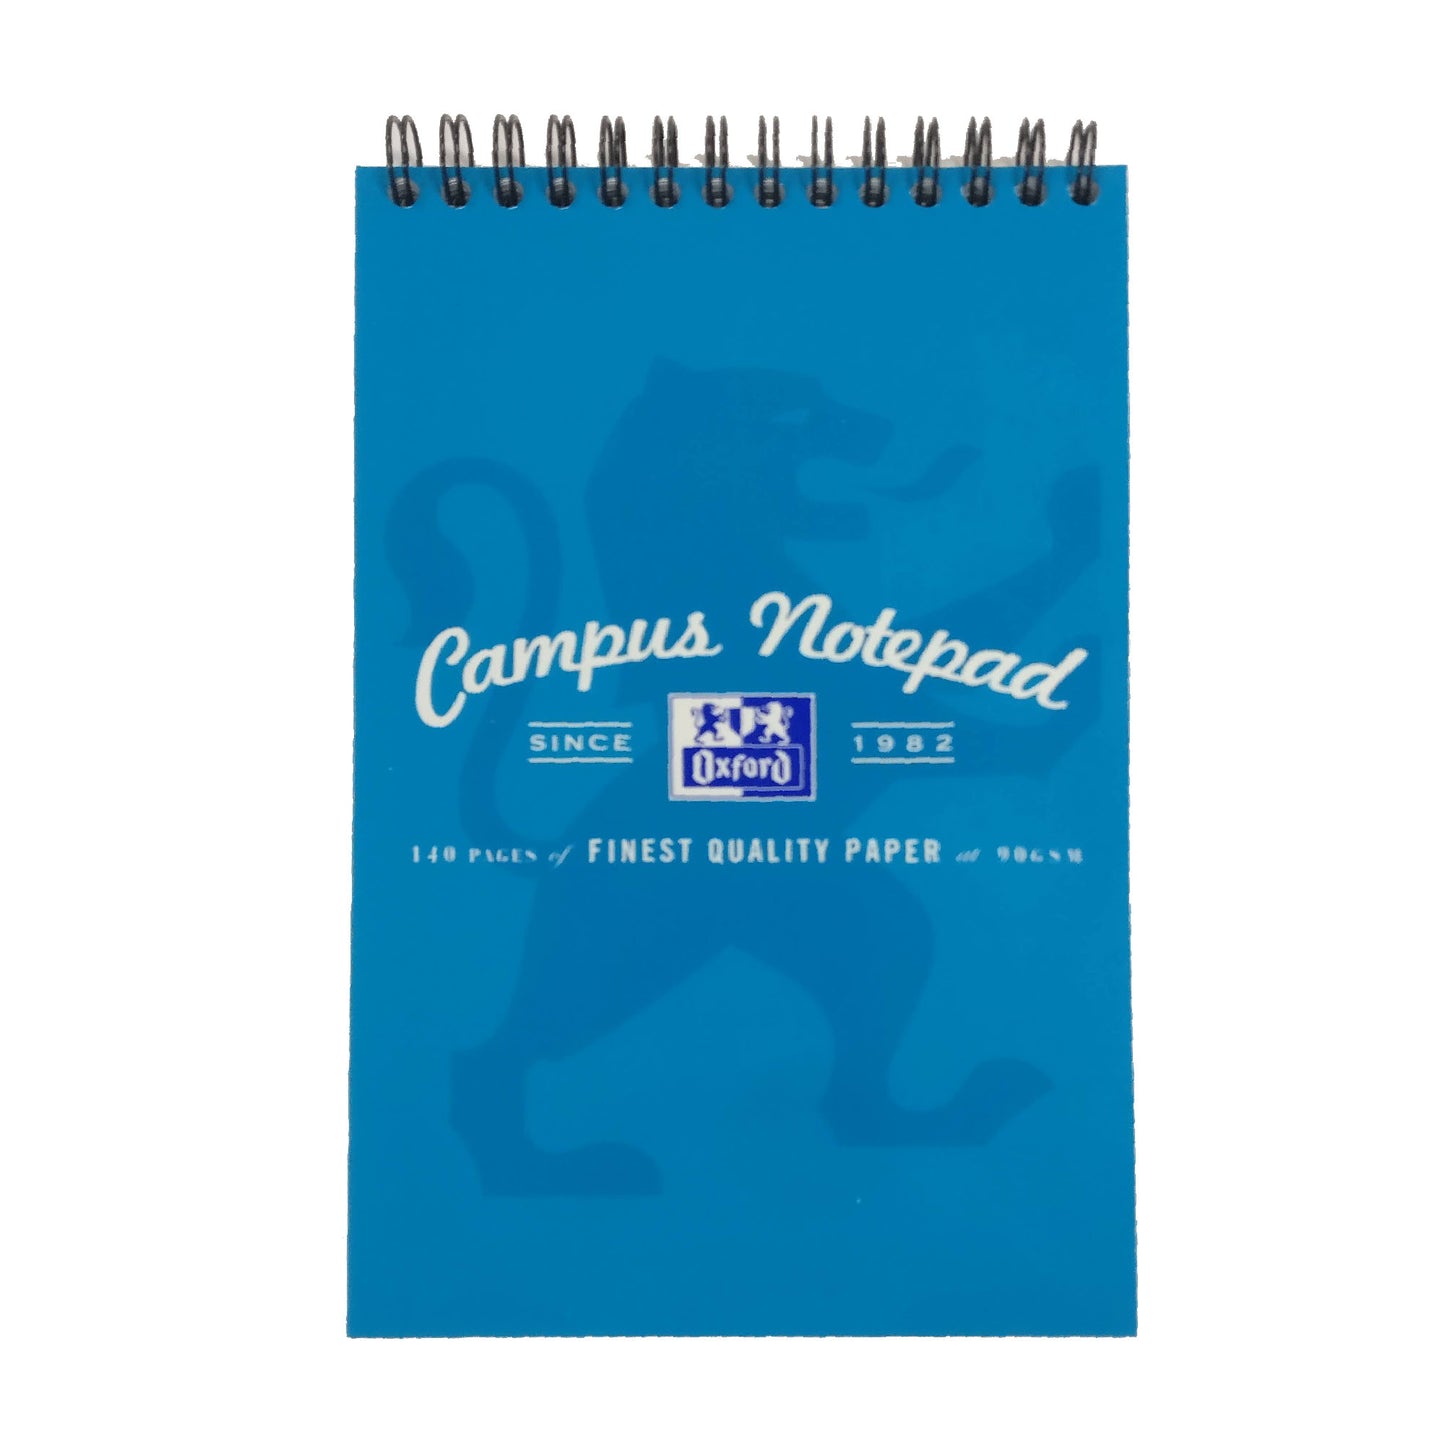 Campus Reporter's Notebook